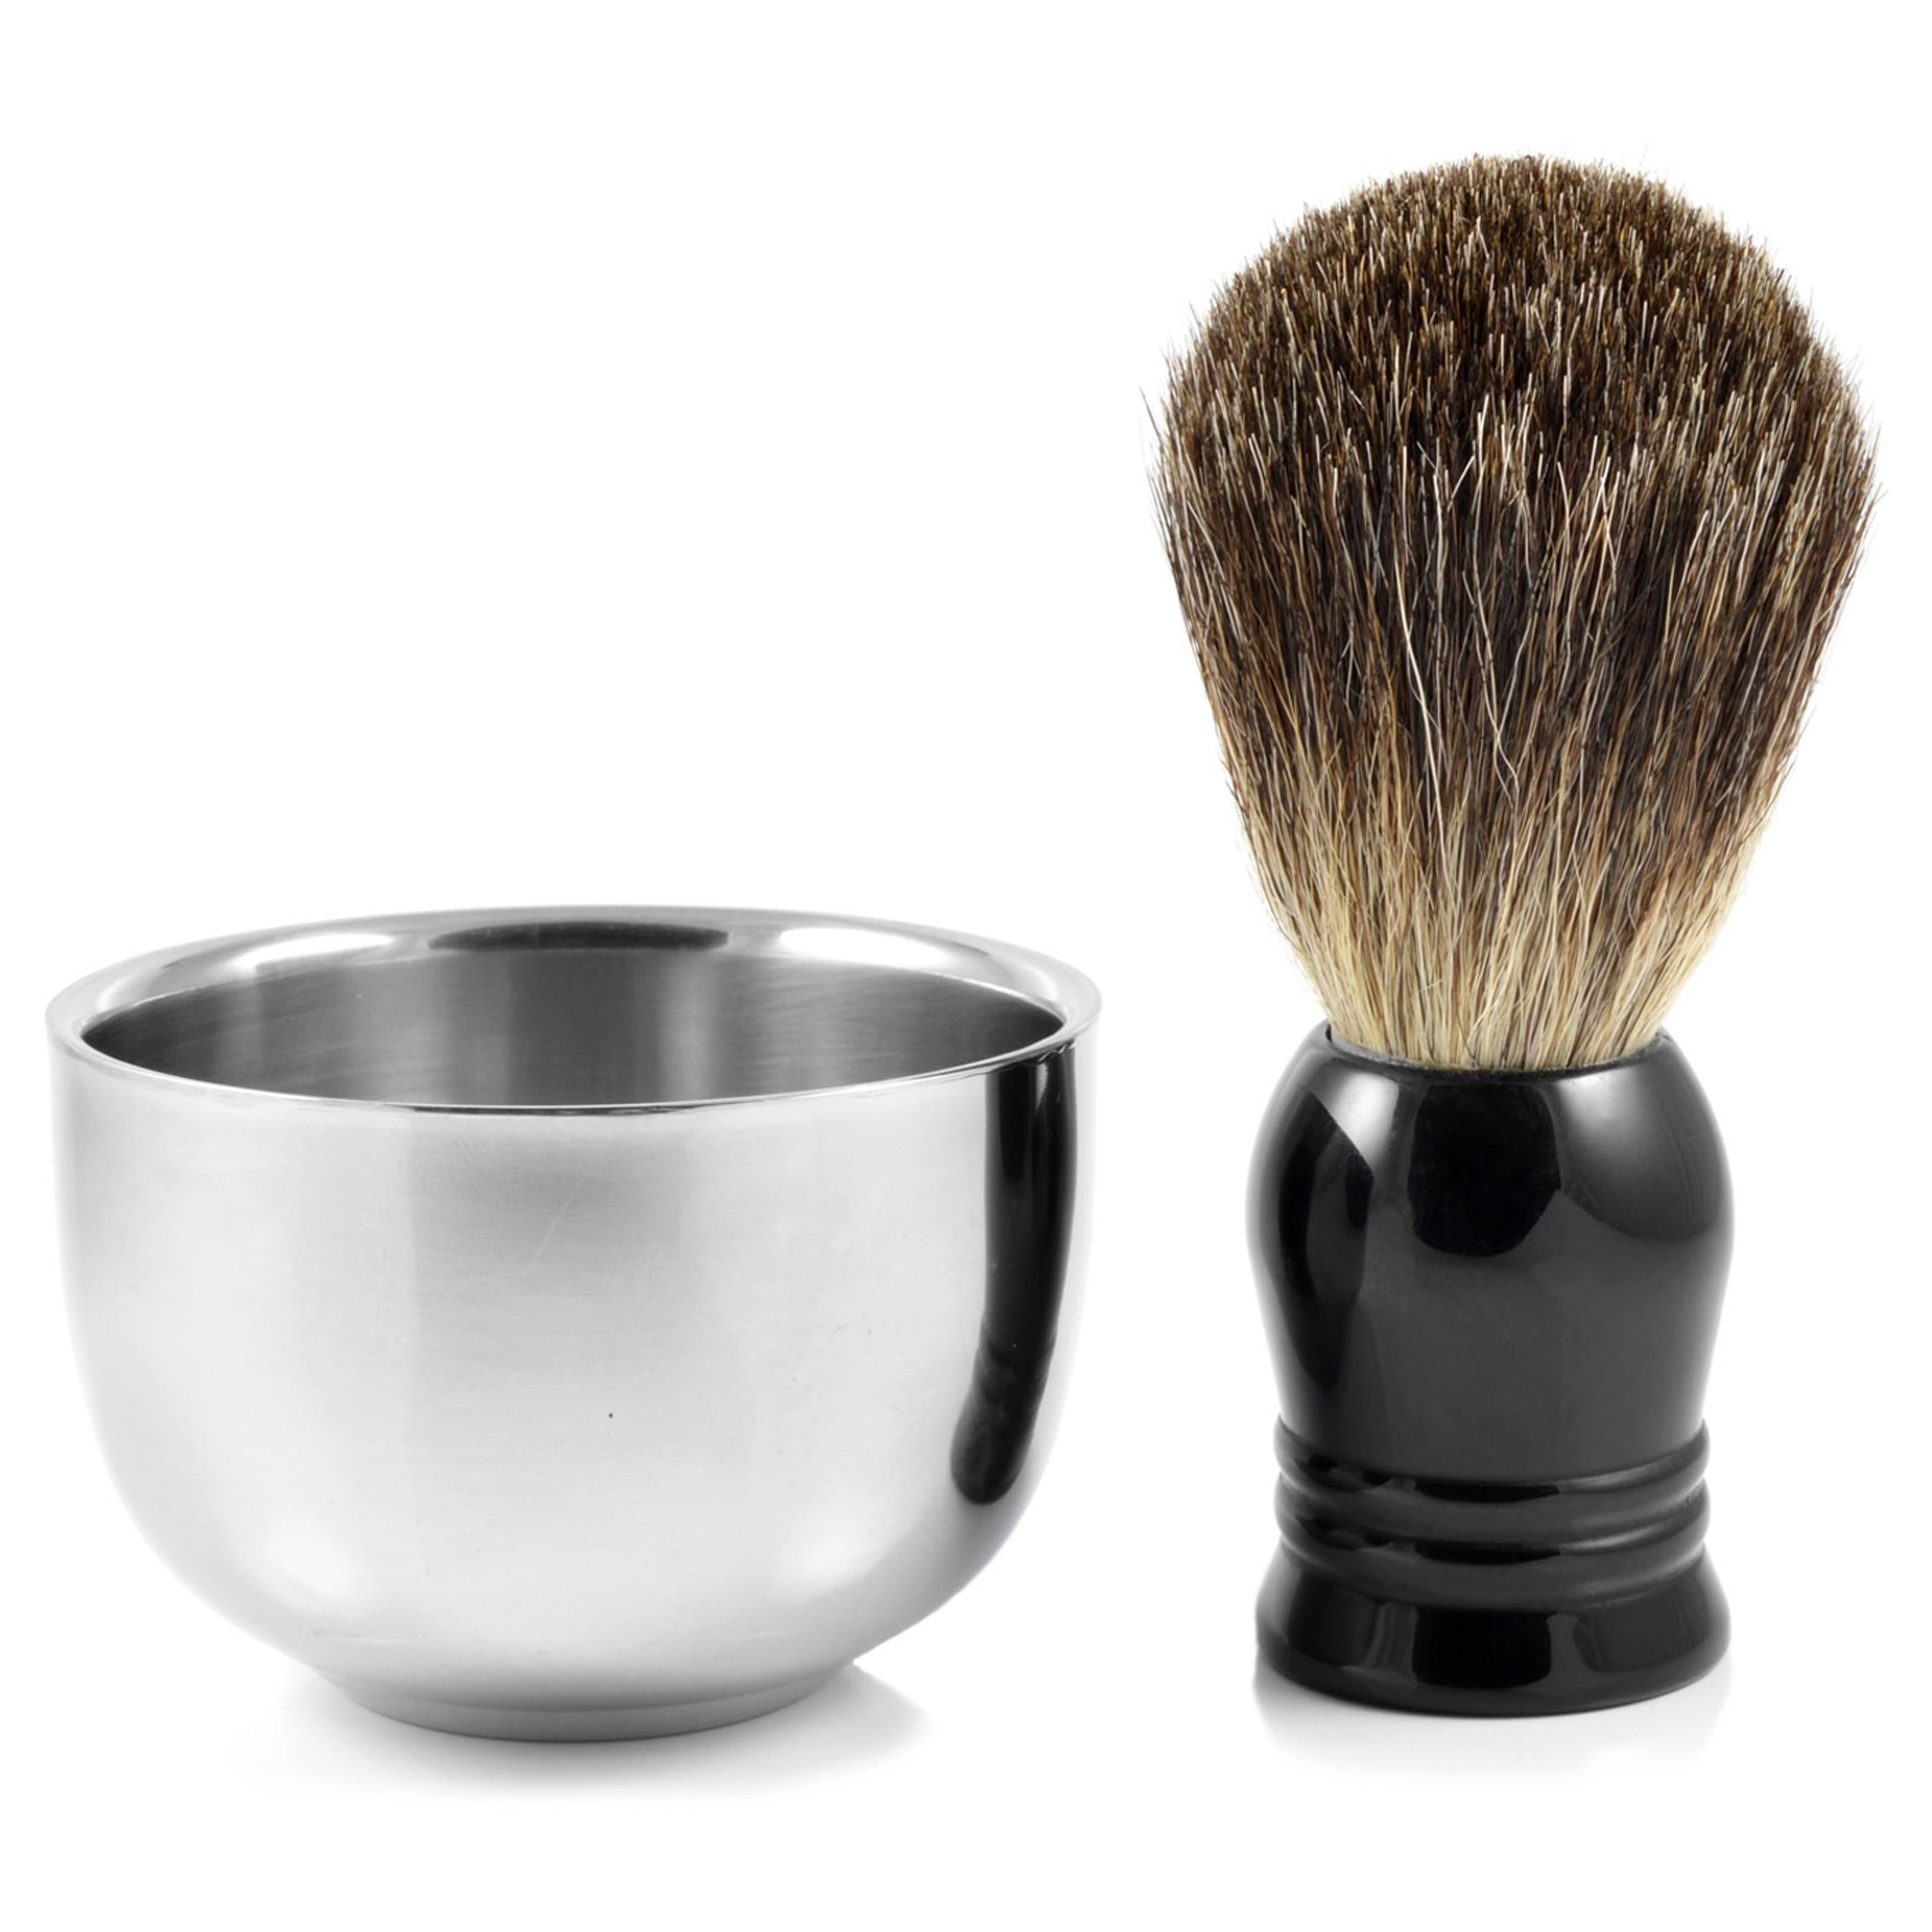 Bowl & Pure Badger Shaving Brush Set